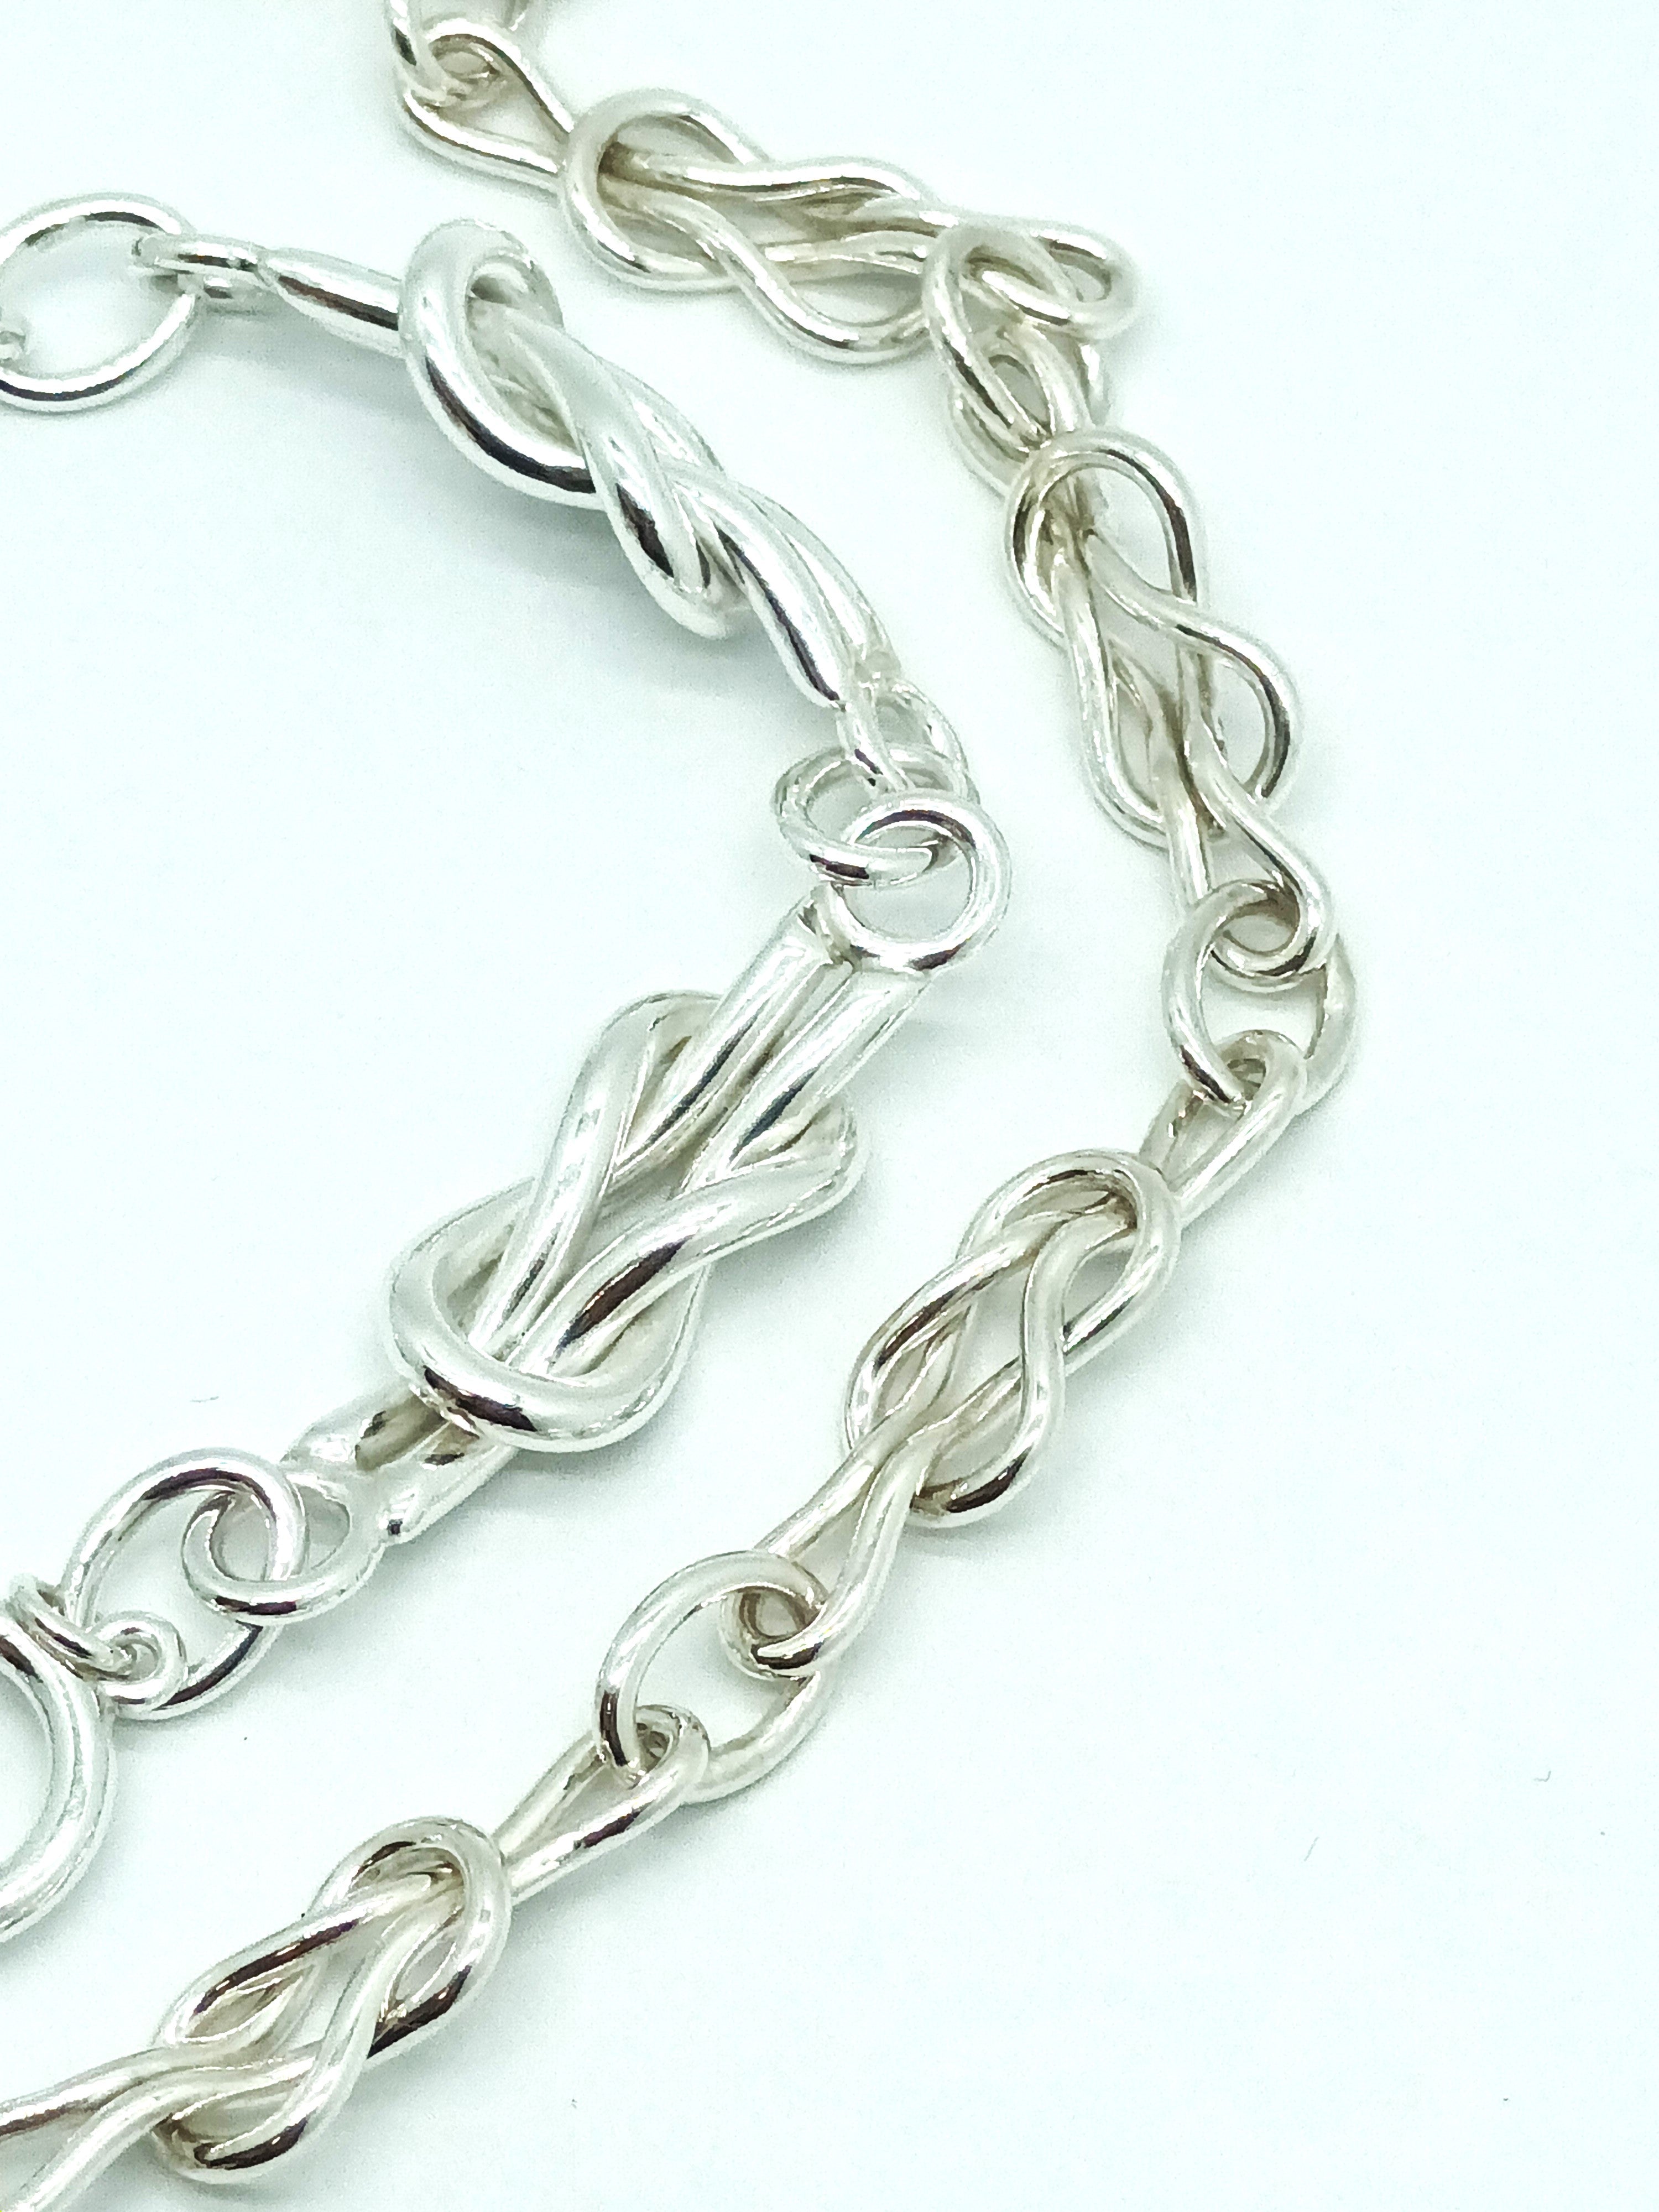 Bracelet chaîne en argent Reef Knot